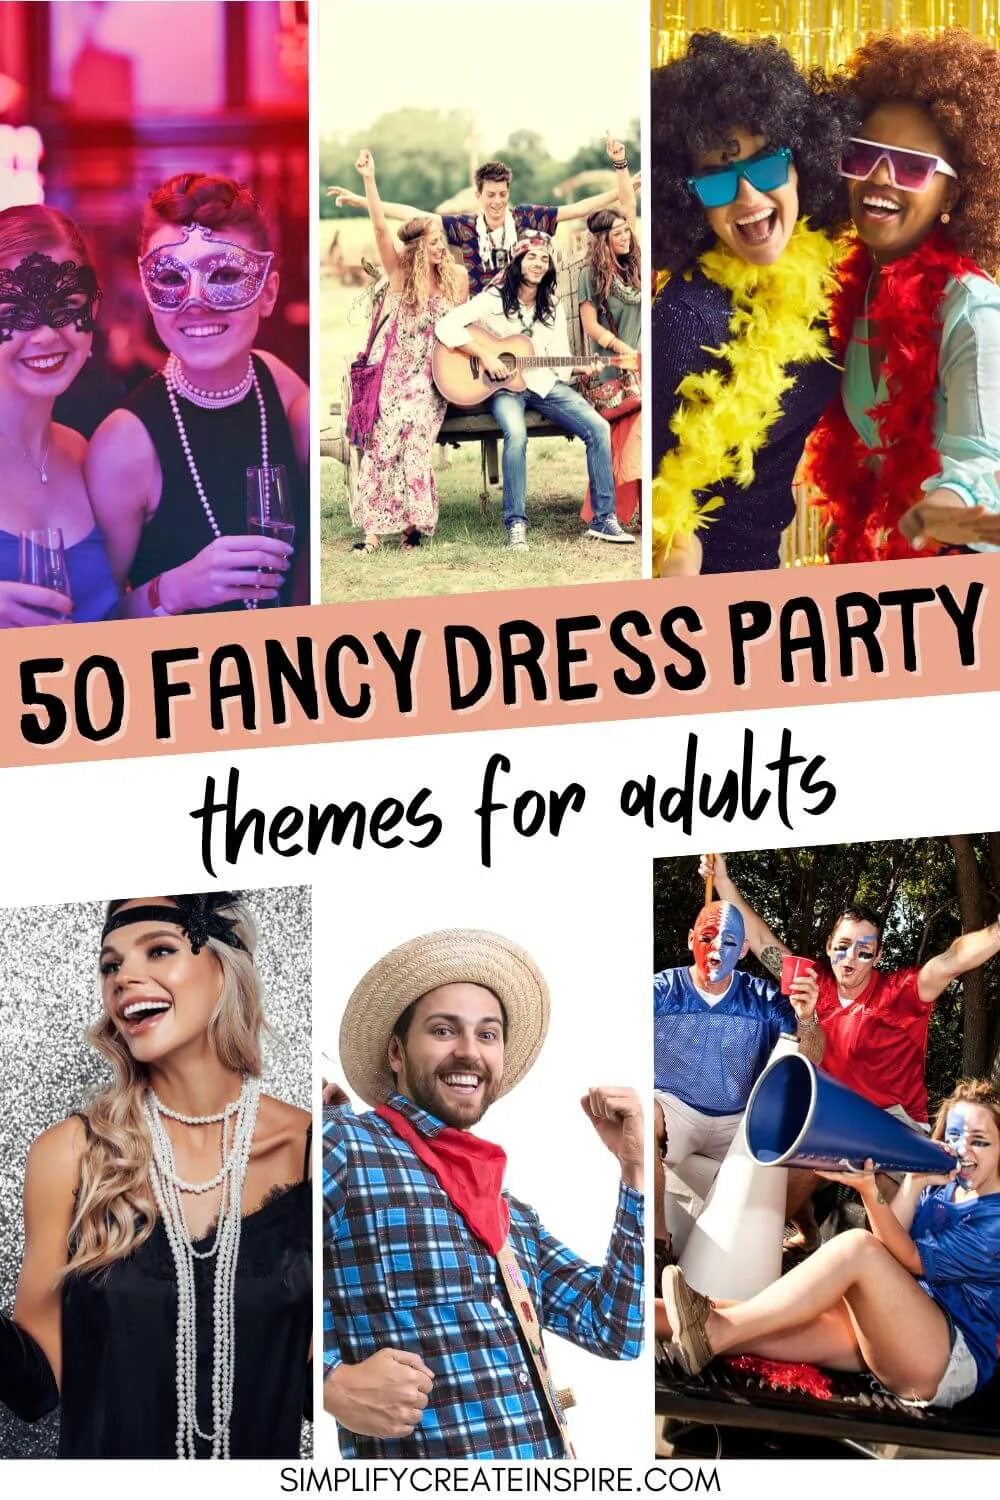 Pinterest image - dress up themes party ideas